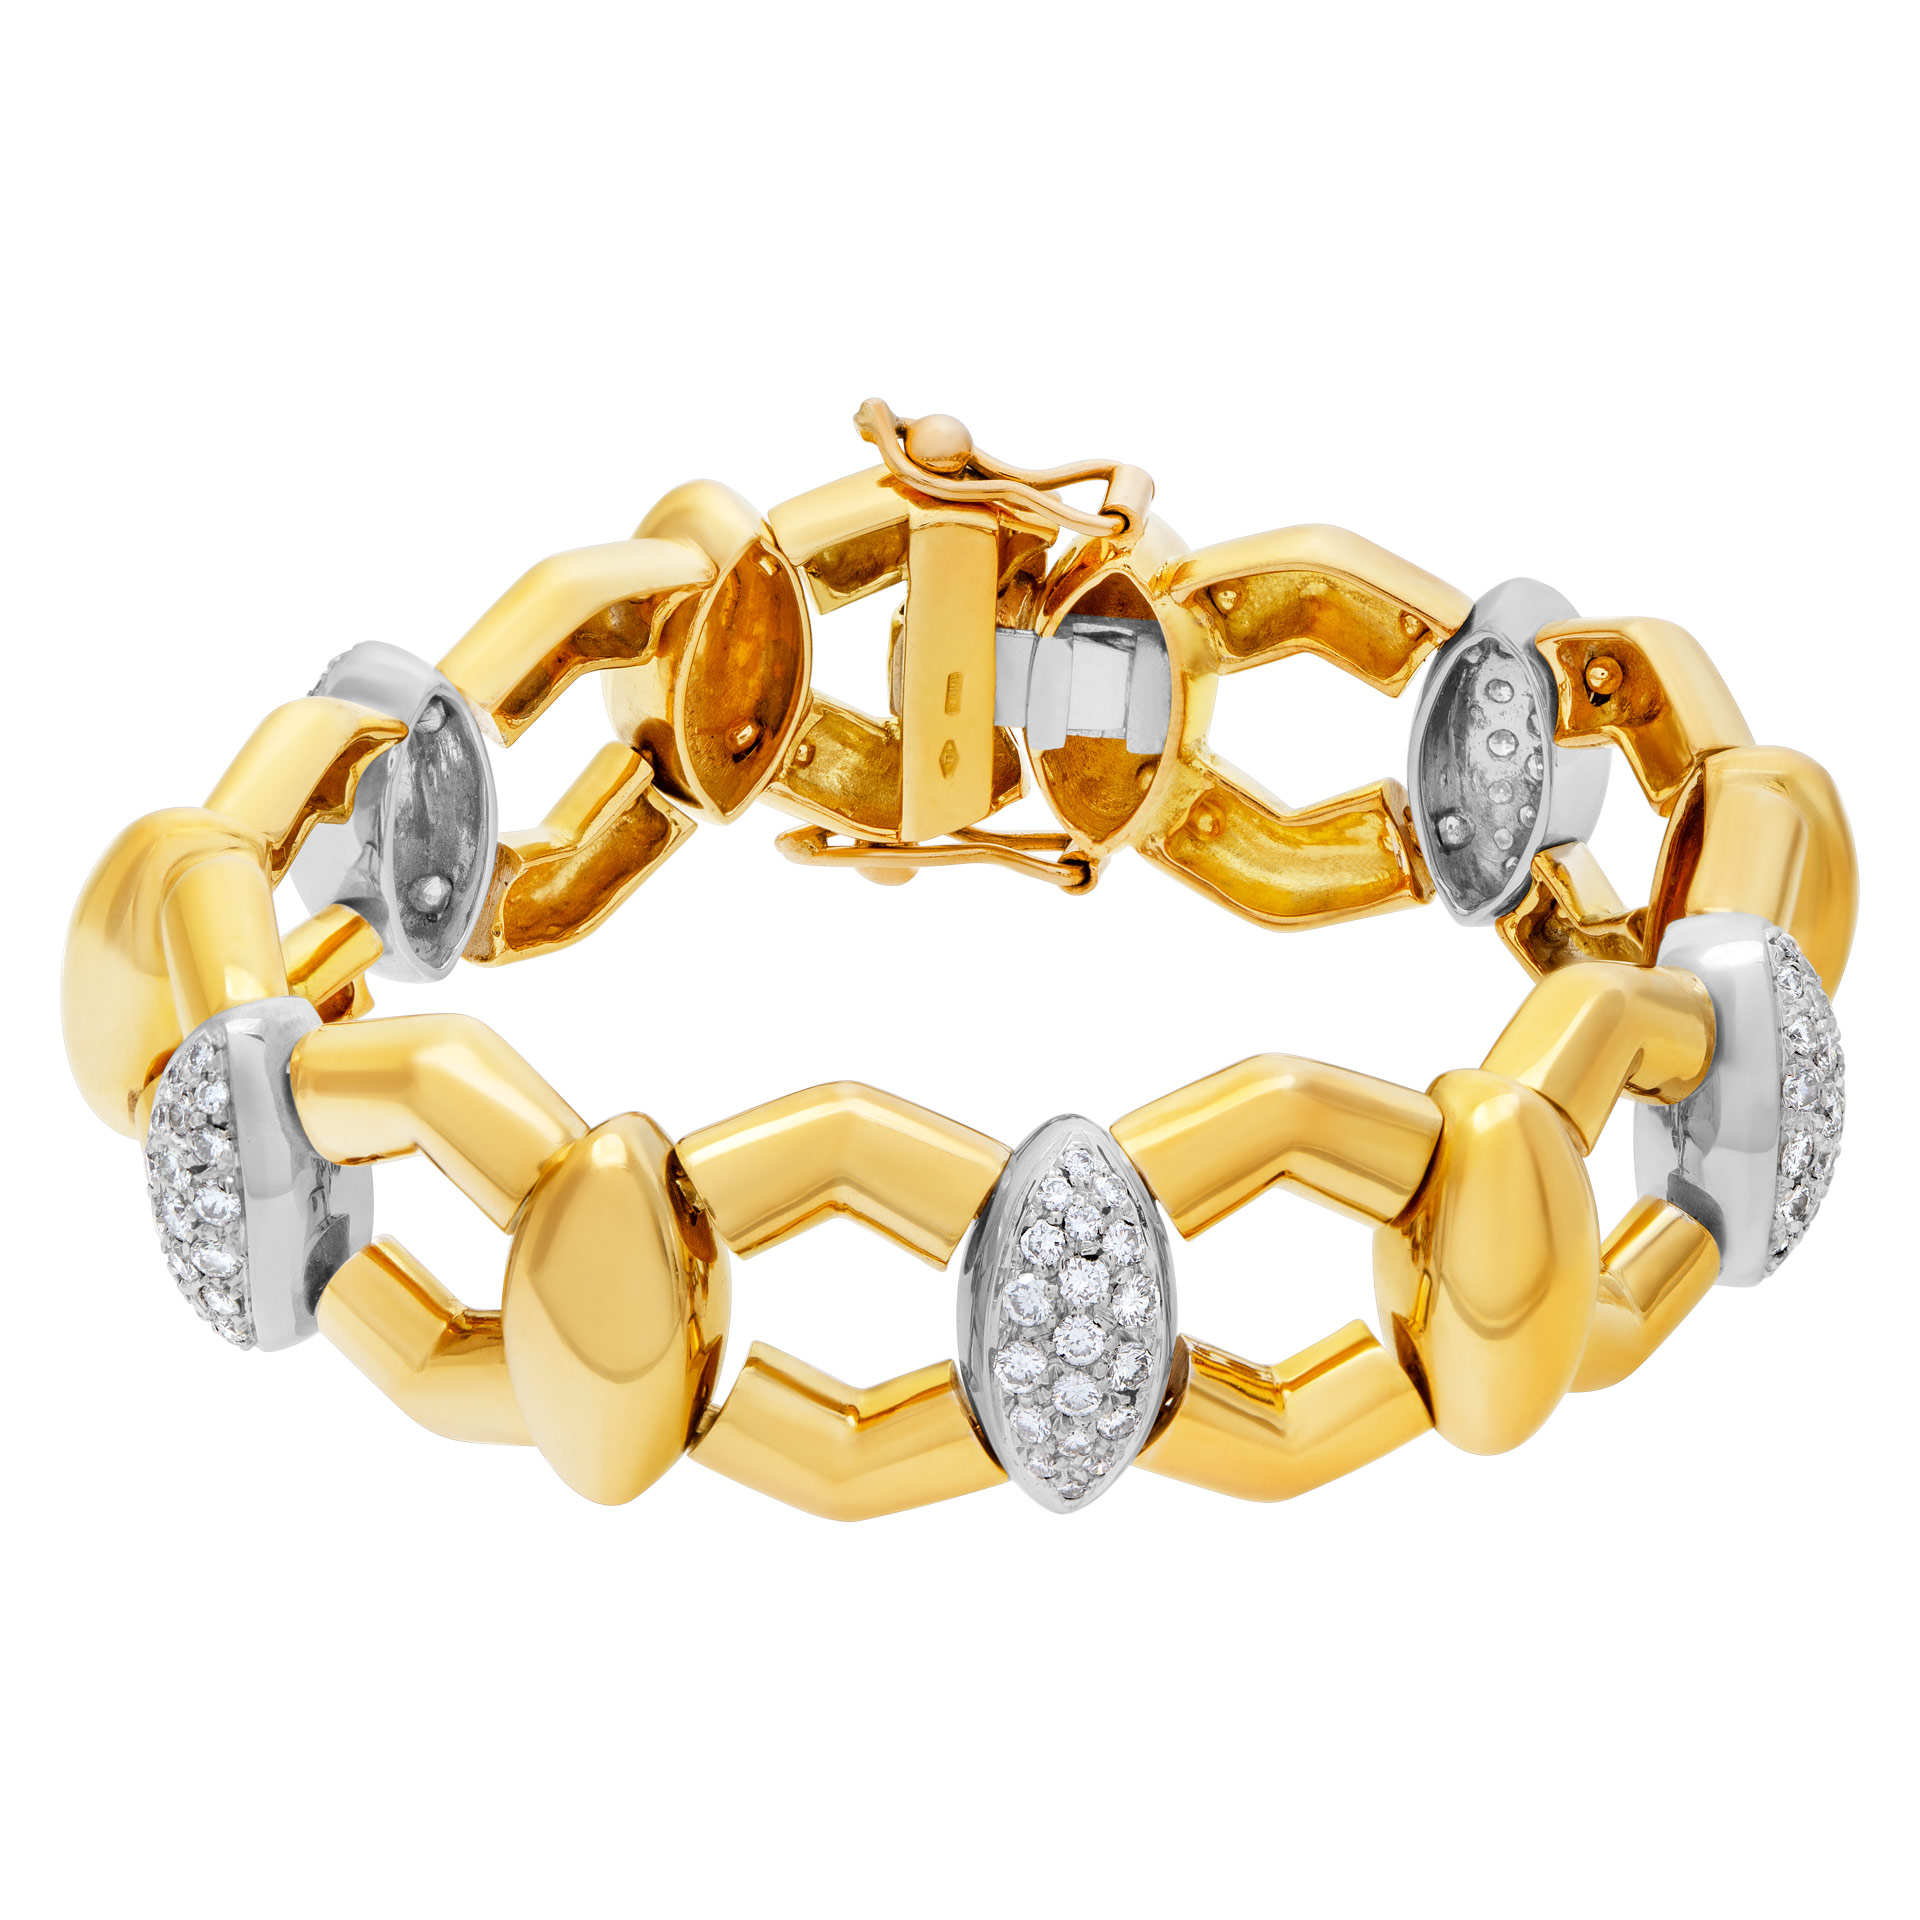 Diamond bracelet set in 18k yellow gold approximately 2.35 carats in diamonds image 1